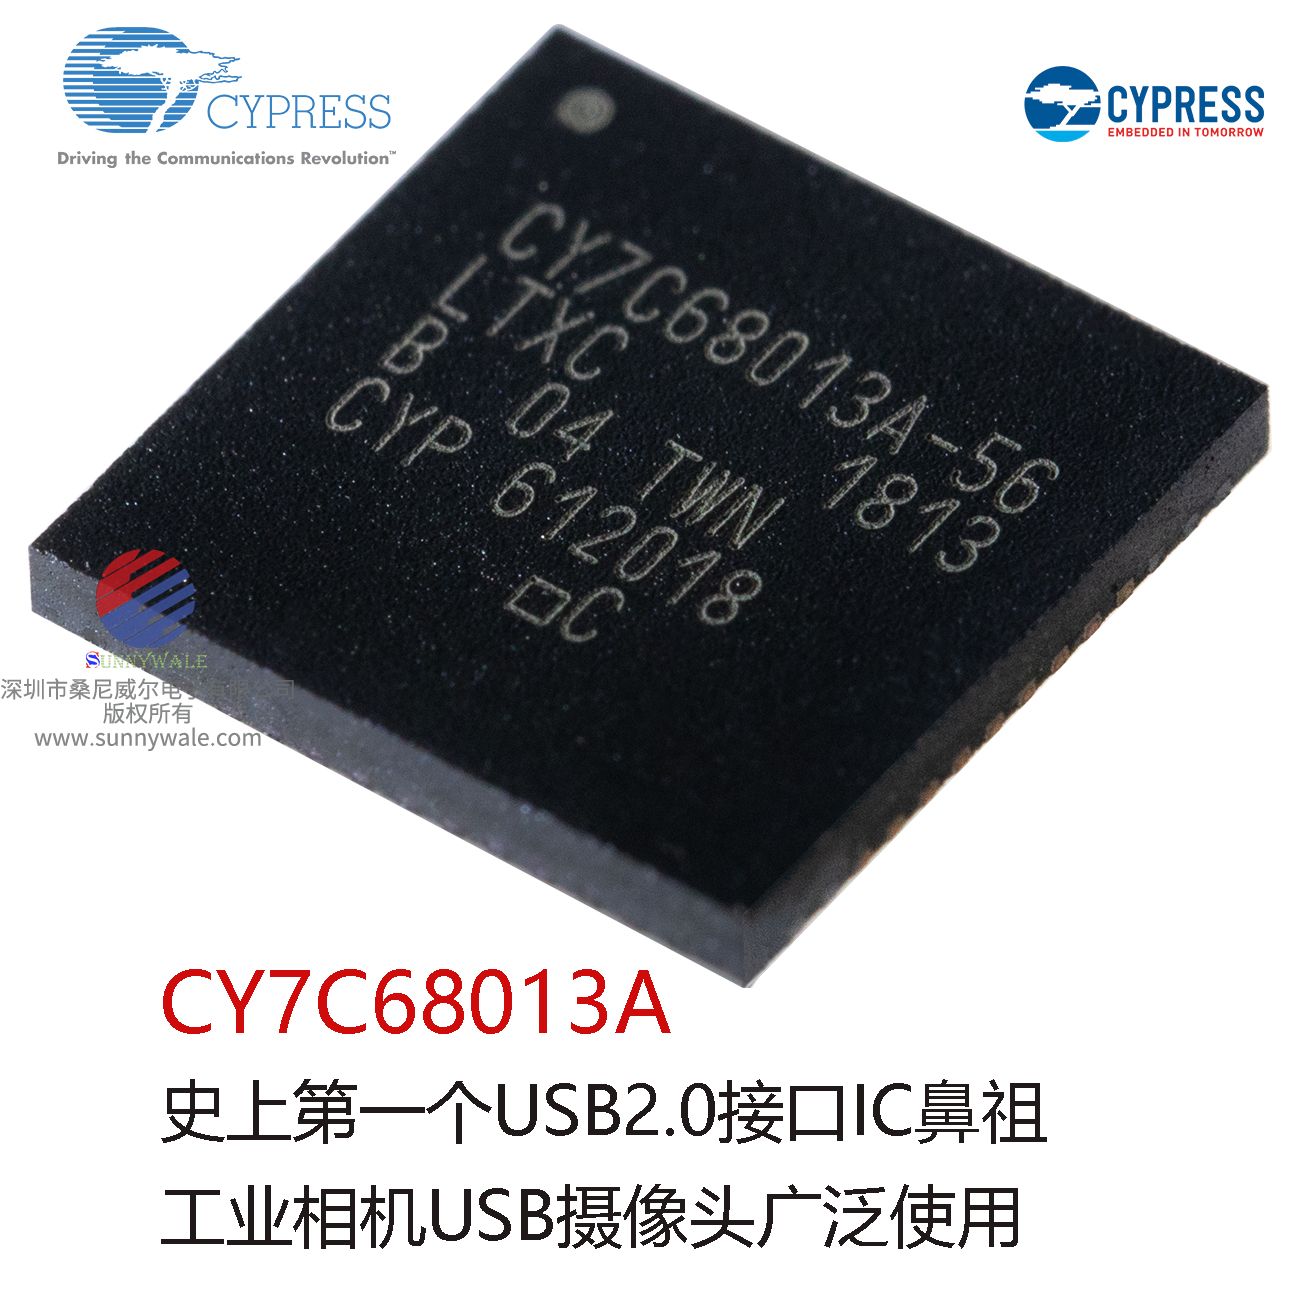 CY7C68013， Cypress， EZ-USB FX2， USB2.0 接口IC，USB摄像头IC，工业相机USB微控制器